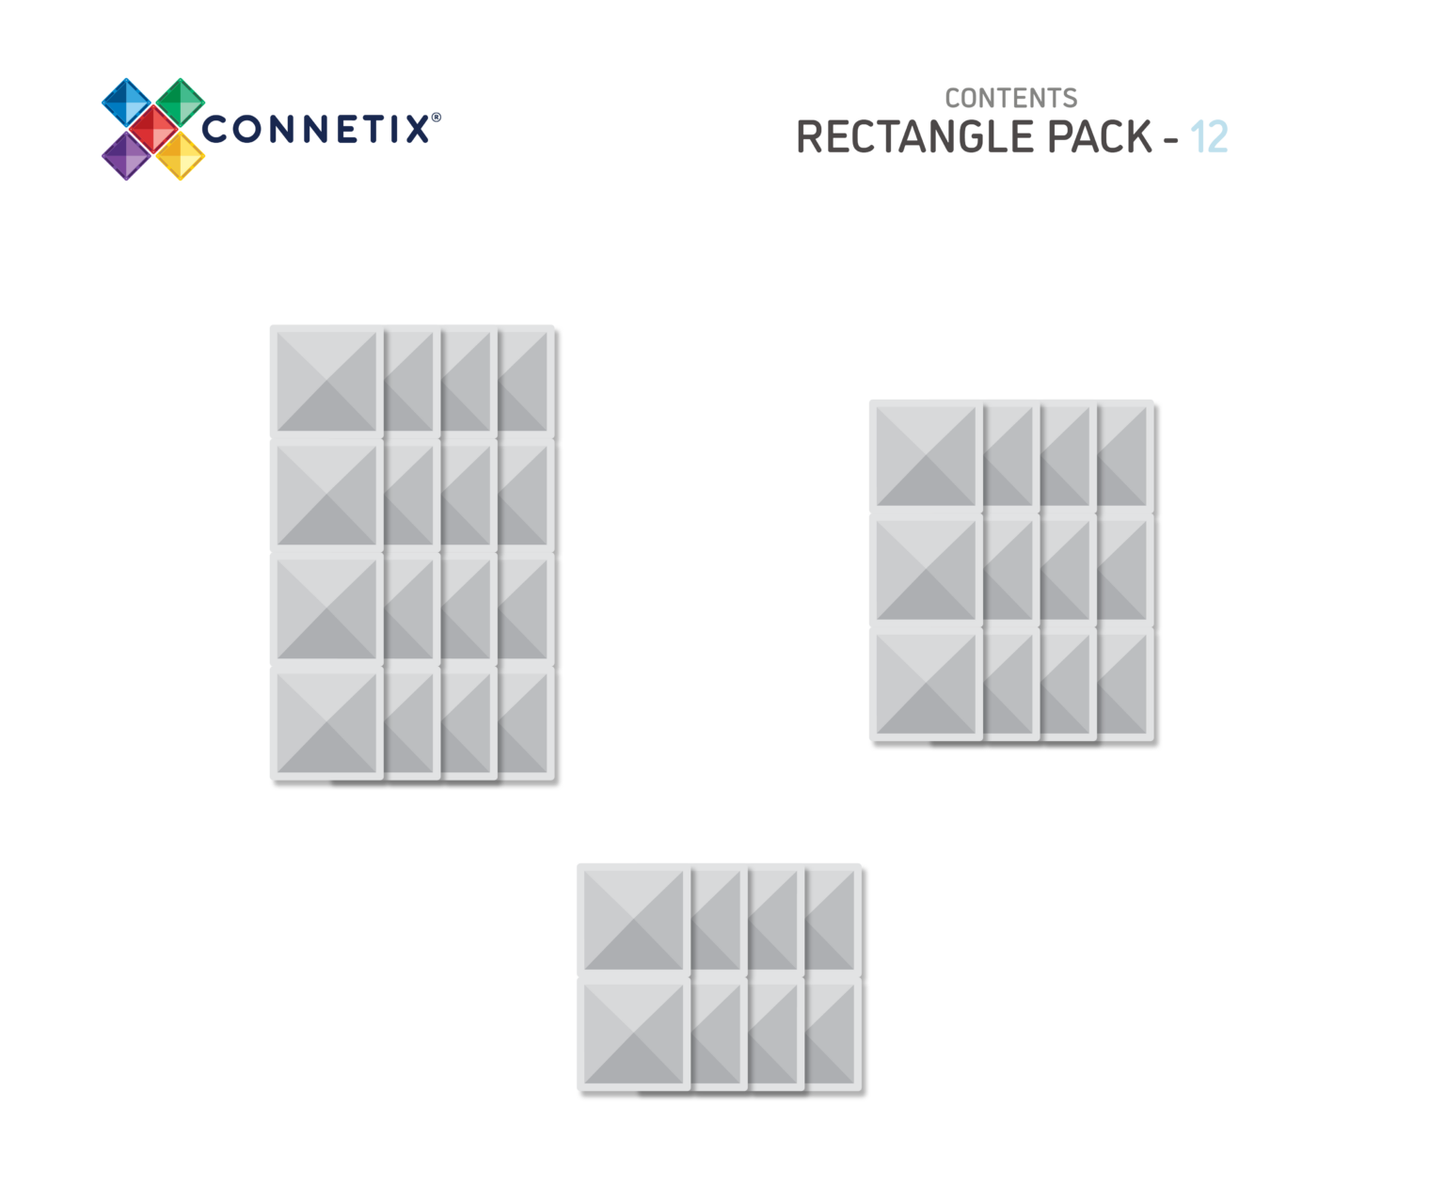 Connetix tiles - Clear Rectangle Pack 12 pc 5